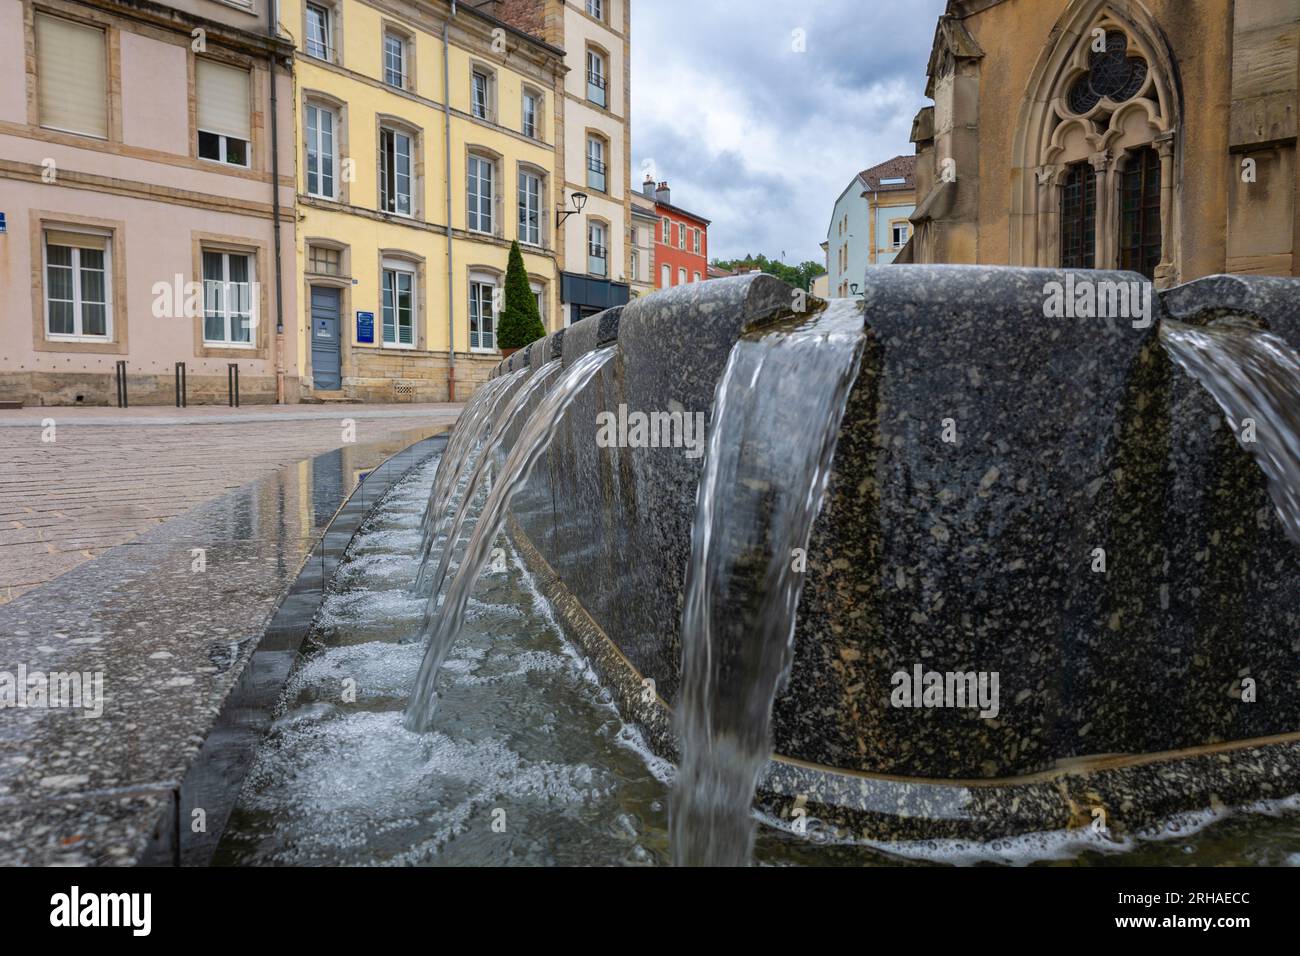 L'antica città di Epinal, una bellissima città francese nella regione dei Vosgi. foto scattata da una vista a occhio di rana di una fontana Foto Stock